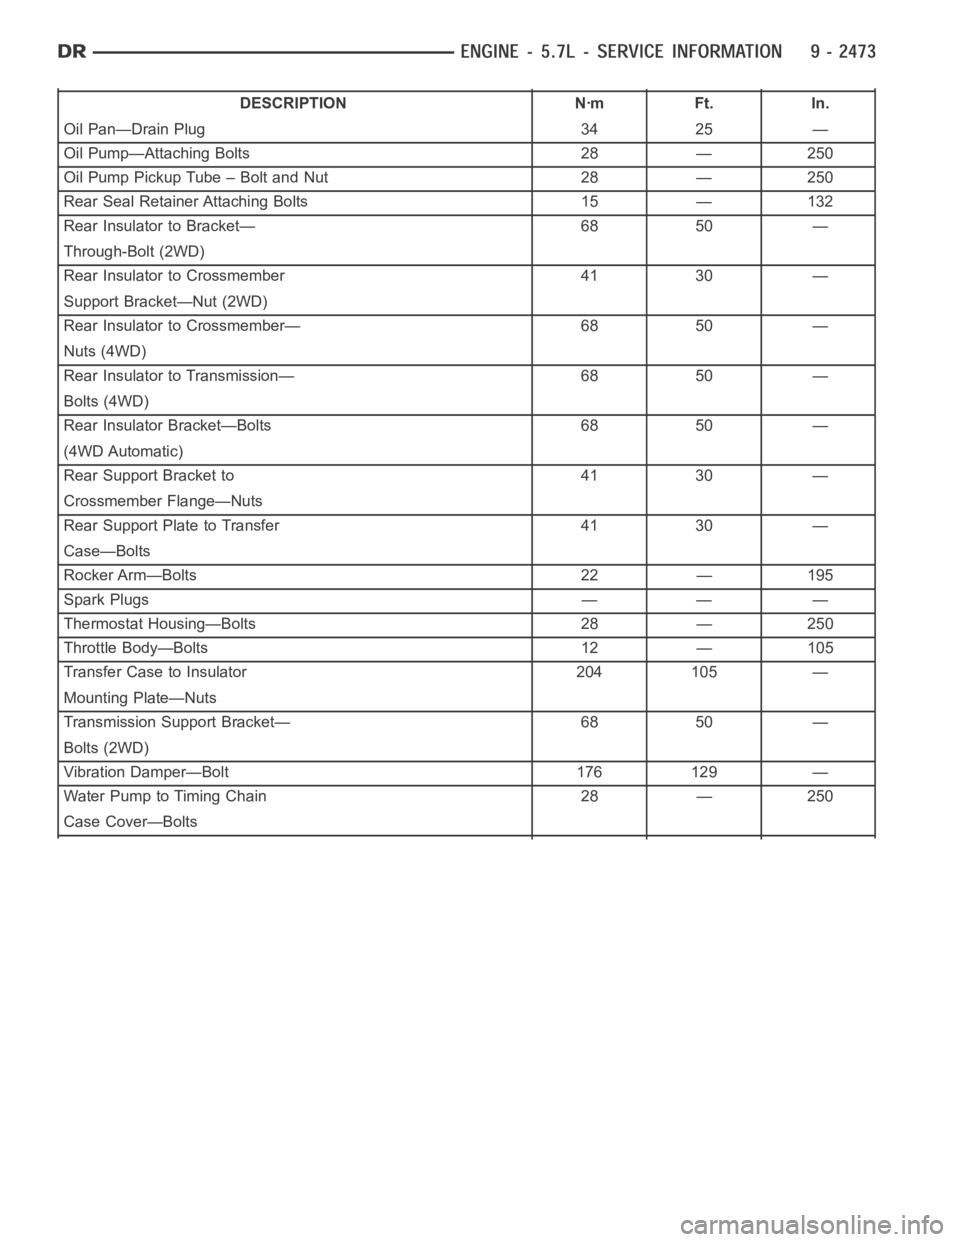 DODGE RAM SRT-10 2006  Service Repair Manual DESCRIPTION Nꞏm Ft. In.
Oil Pan—Drain Plug 34 25 —
Oil Pump—Attaching Bolts 28 — 250
Oil Pump Pickup Tube – Bolt and Nut 28 — 250
Rear Seal Retainer Attaching Bolts 15 — 132
Rear Insul